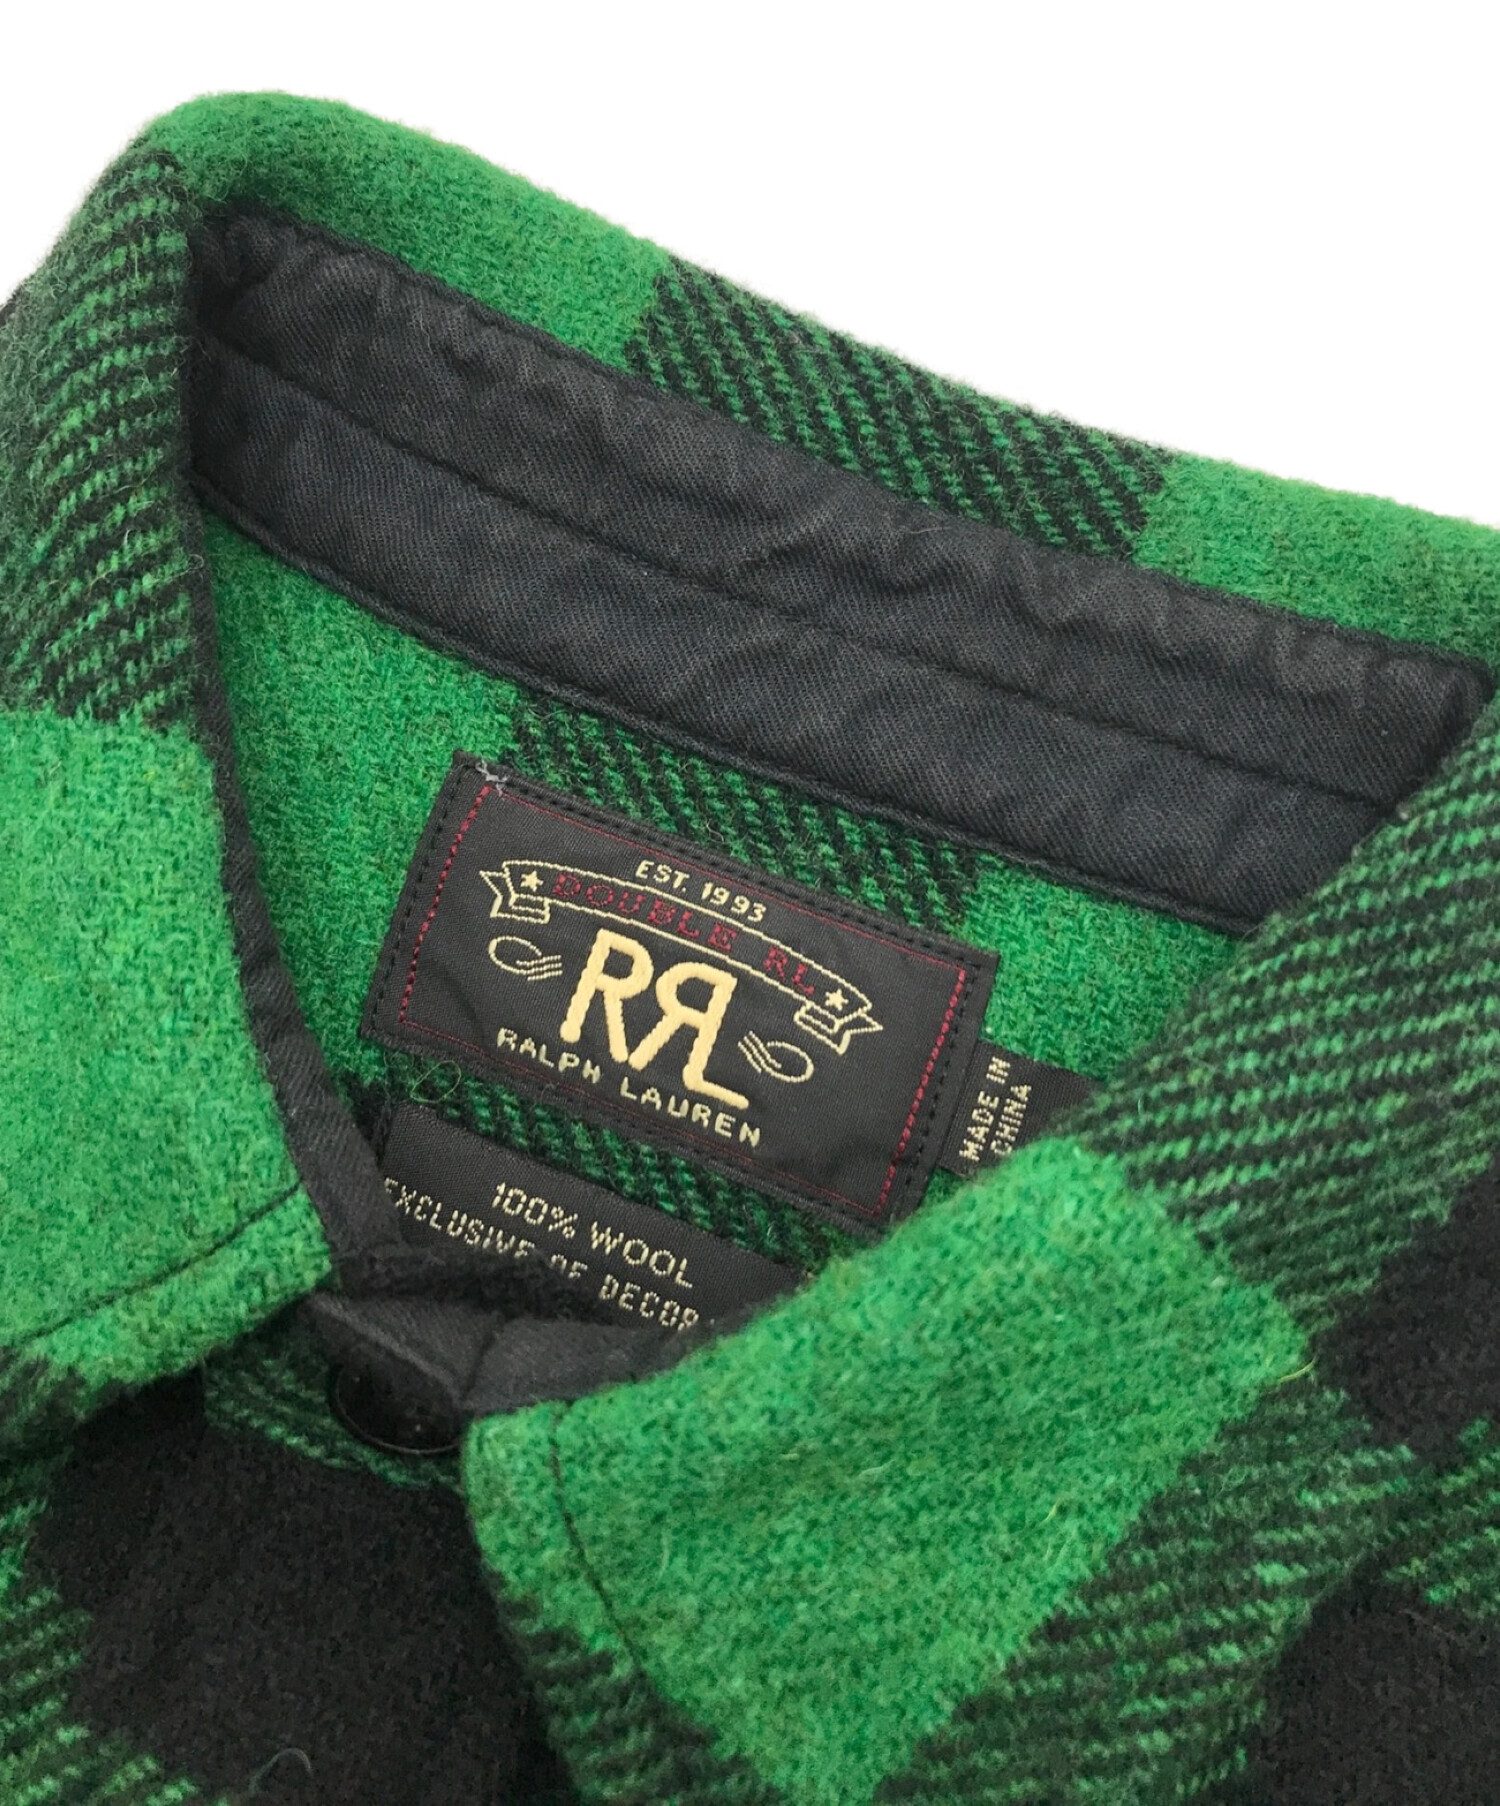 RRL (ダブルアールエル) バッファローチェックウールシャツ グリーン サイズ:S